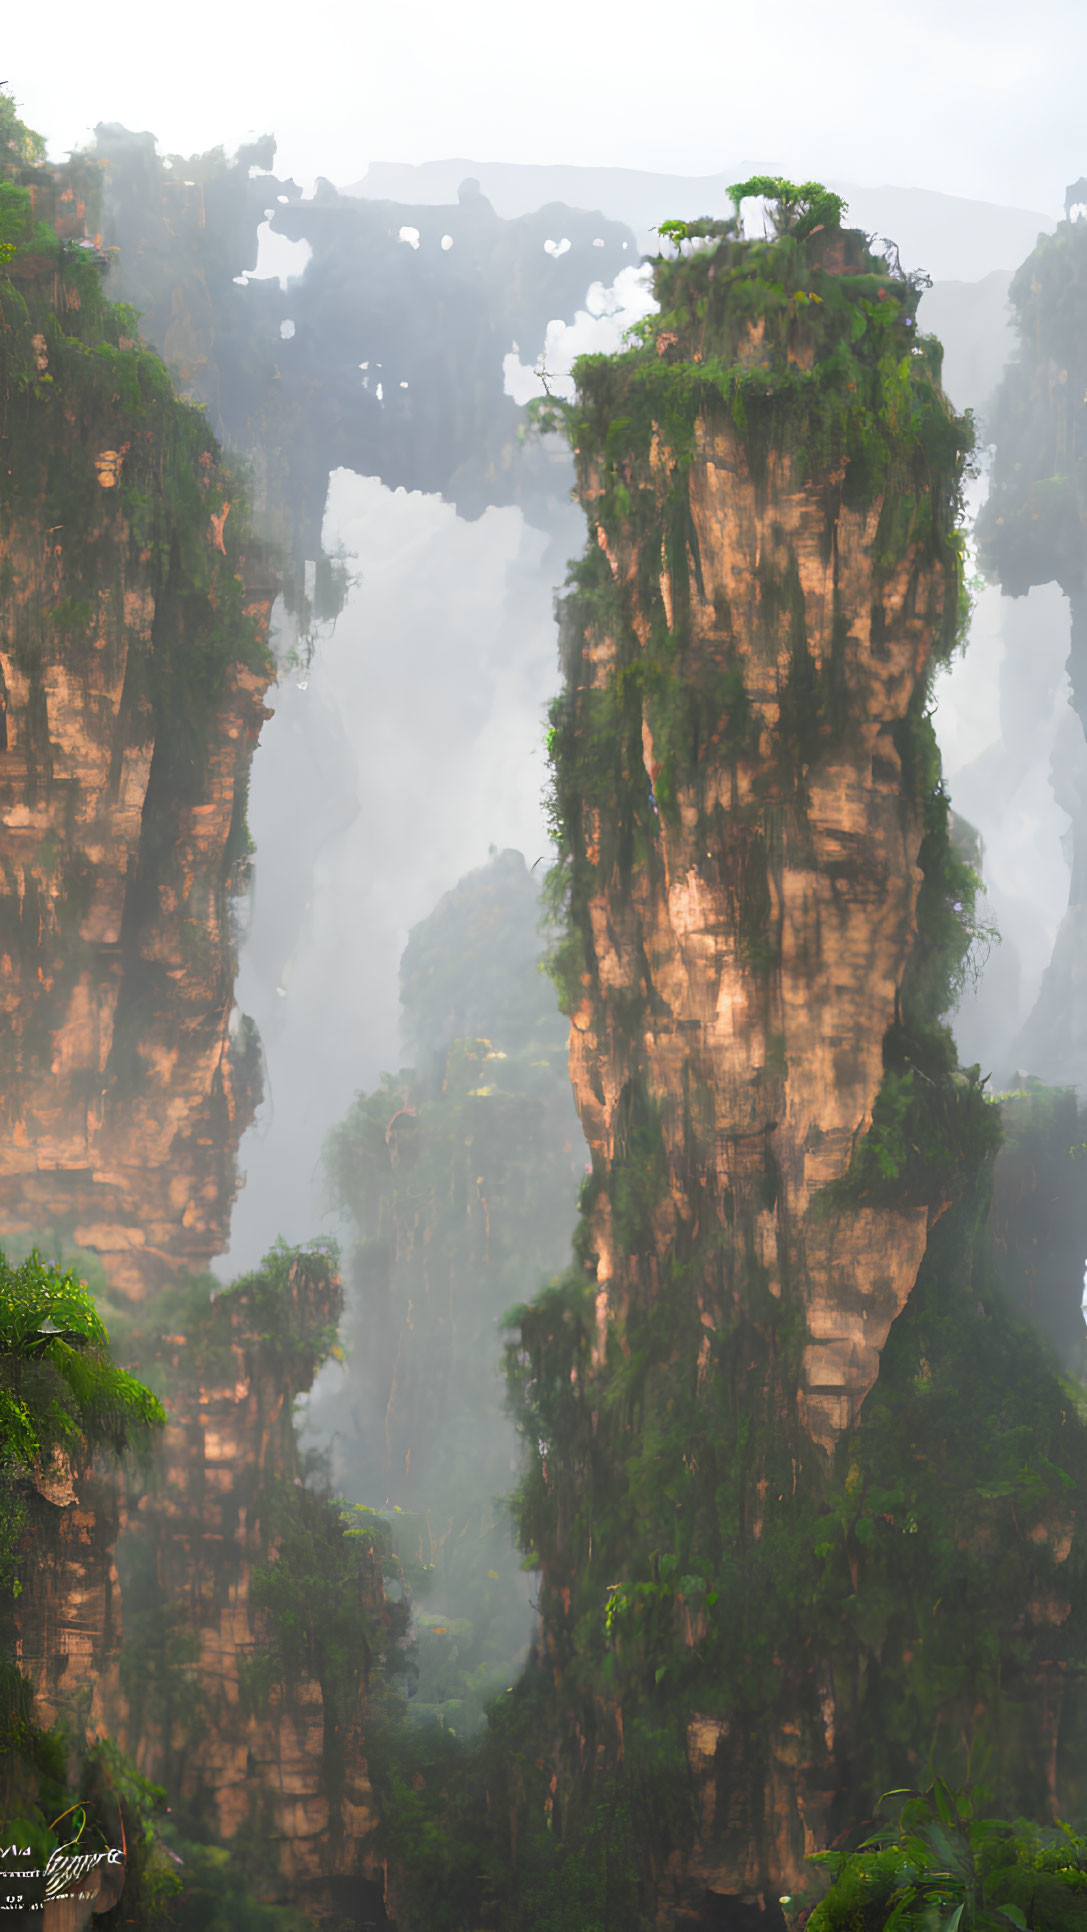 Mist-covered sandstone pillars in lush green foliage